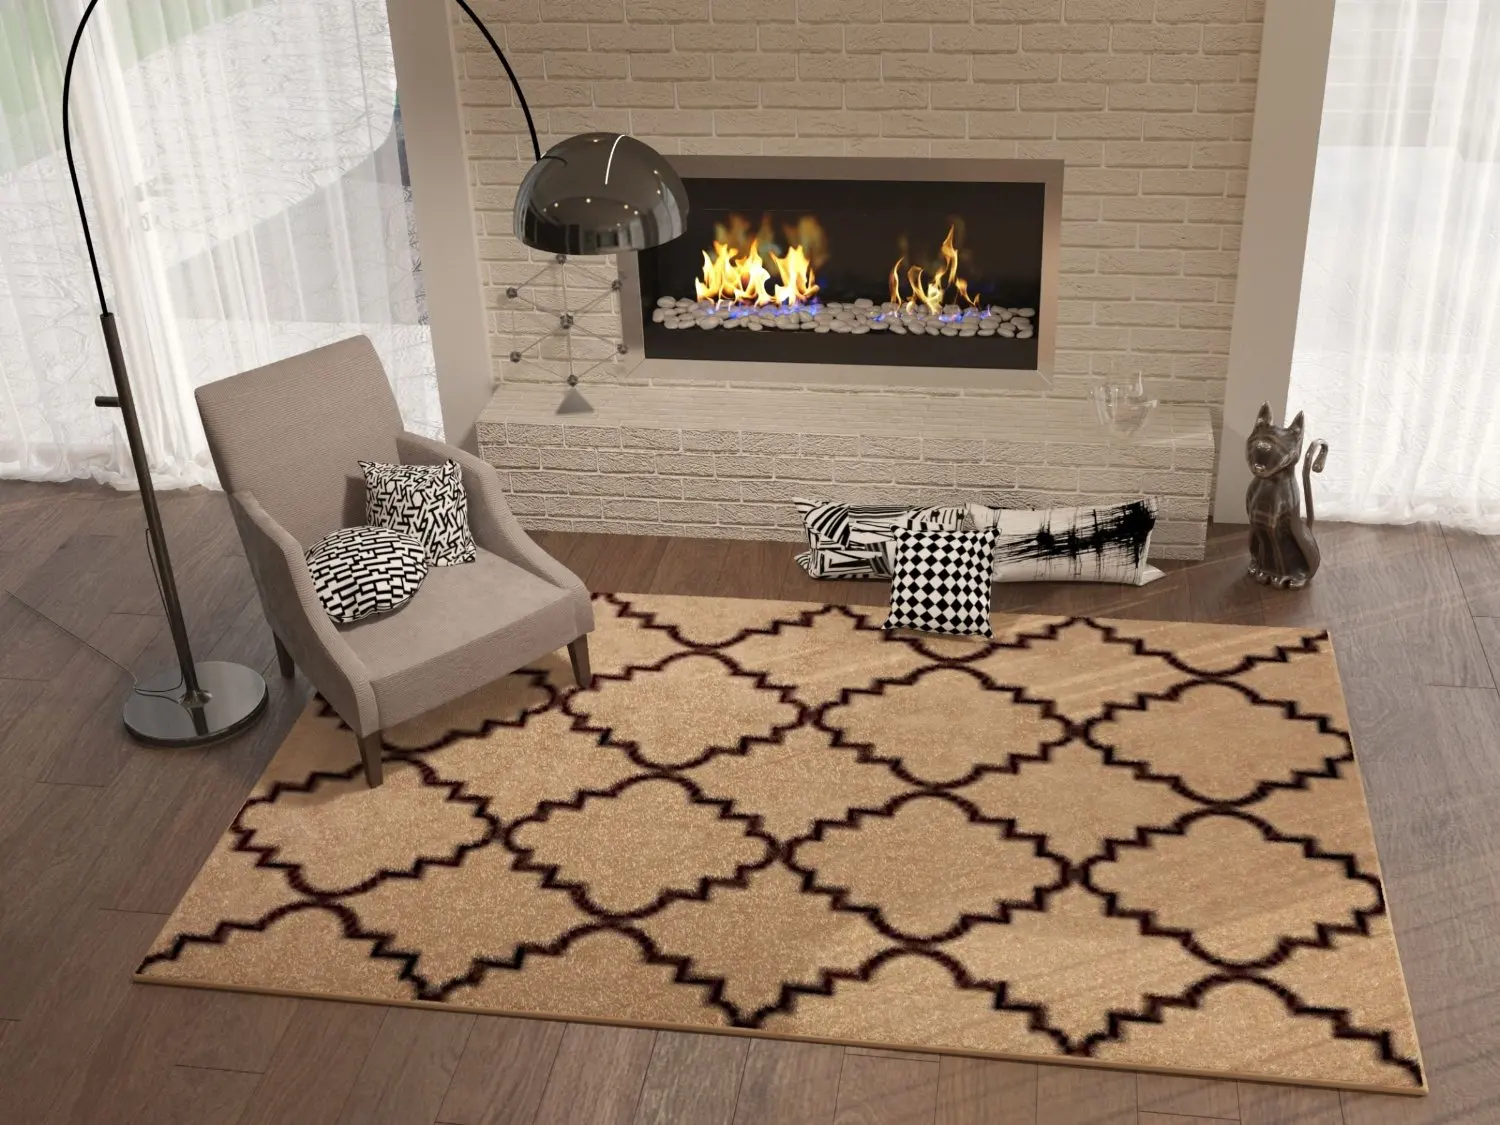 3x5 area rug living room